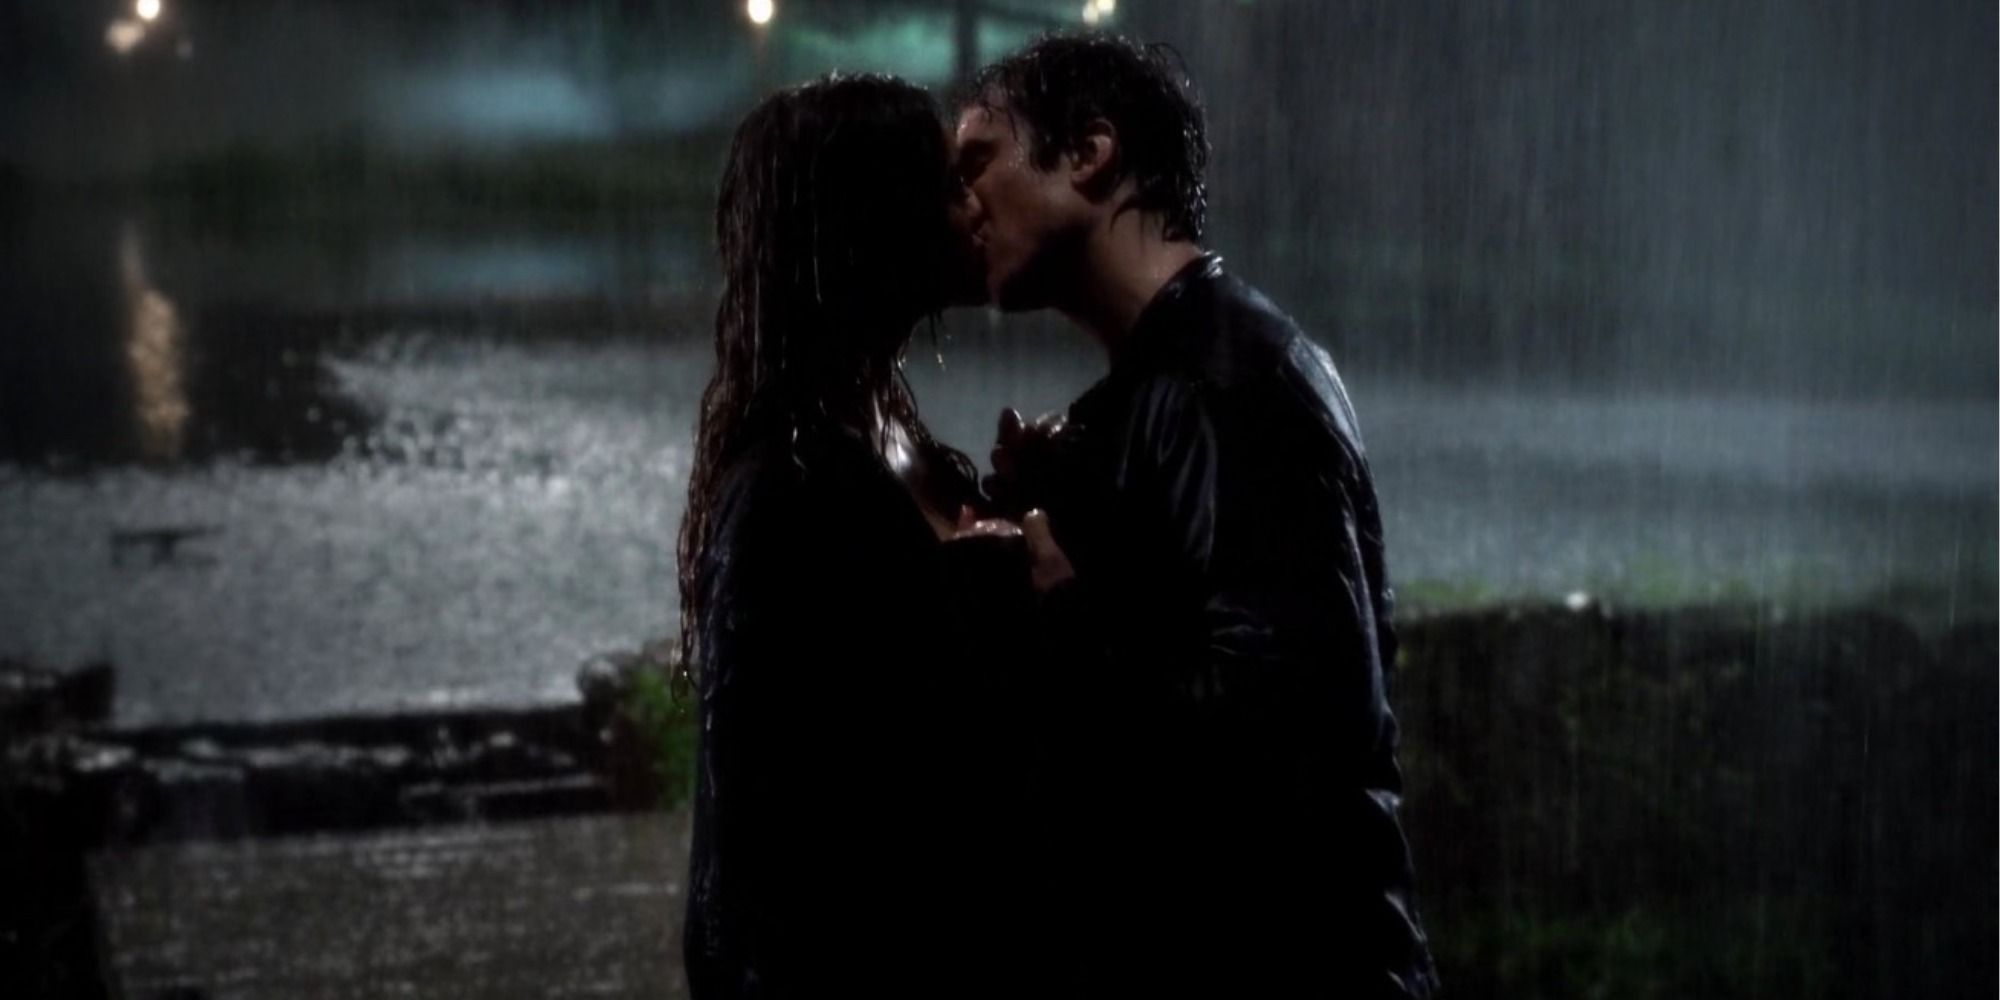 Elena kisses Damon in the rain on The Vampire Diaries